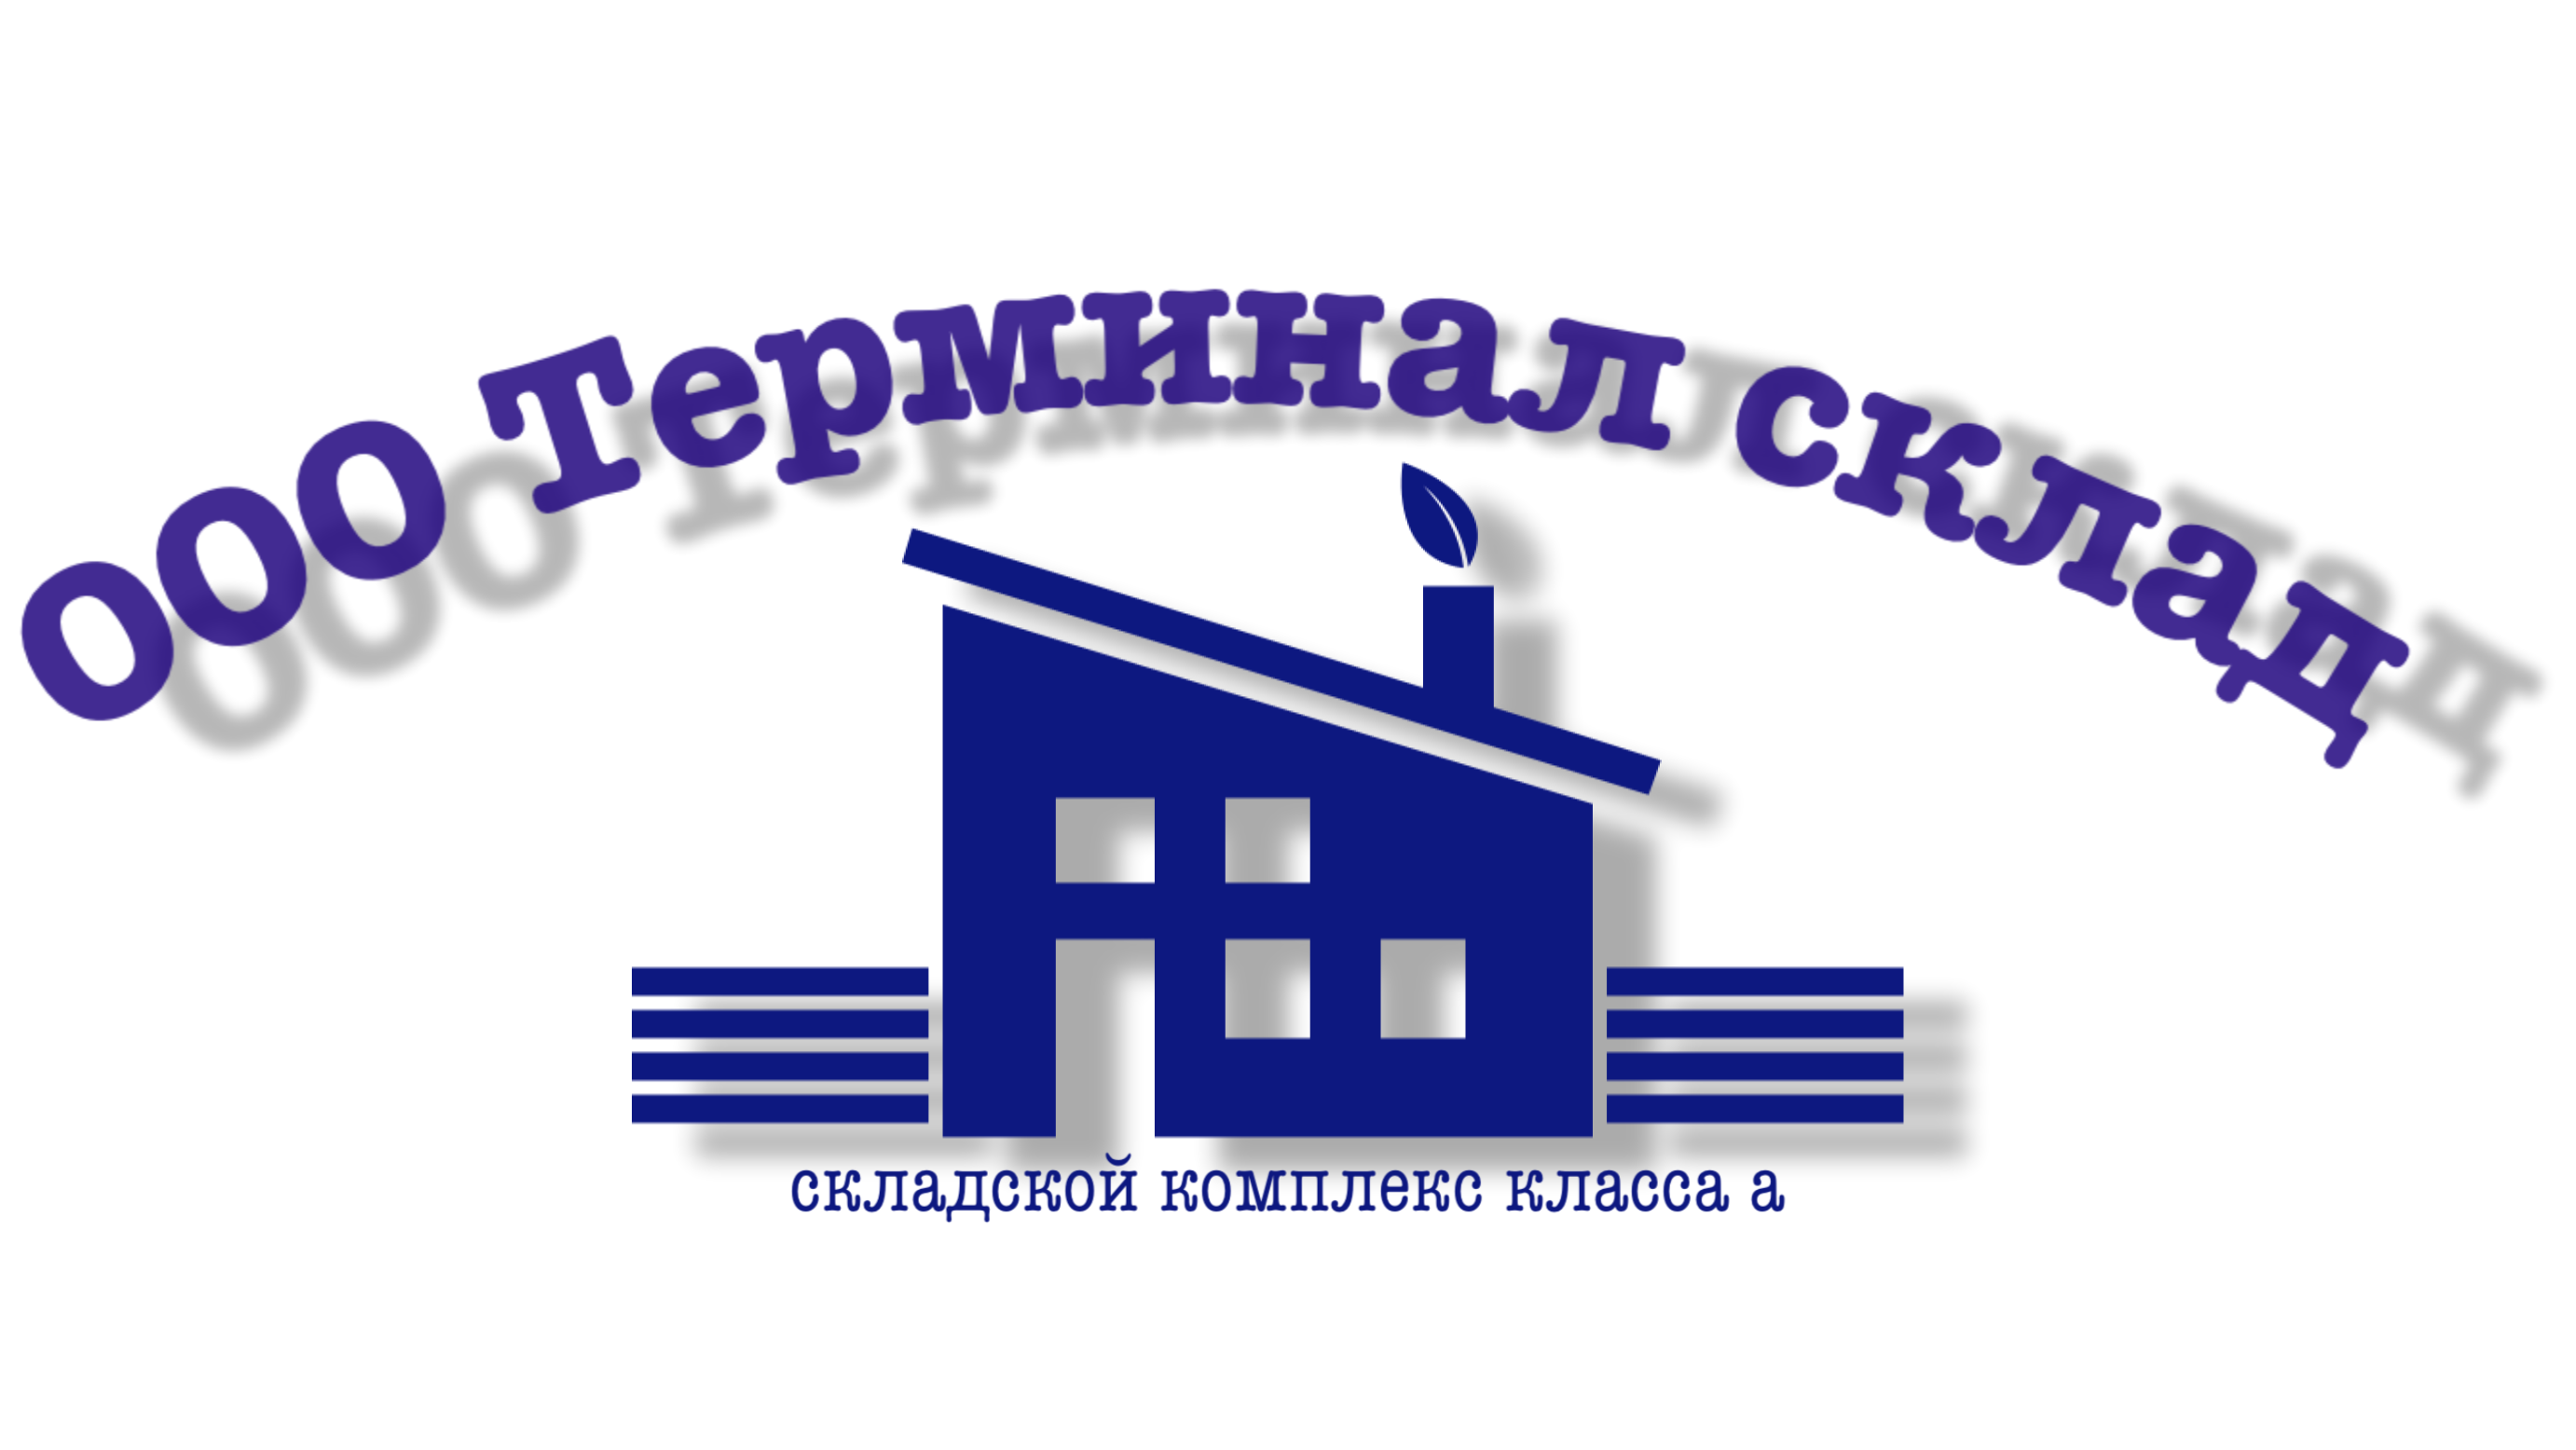 Логотип ооо Терминал склад